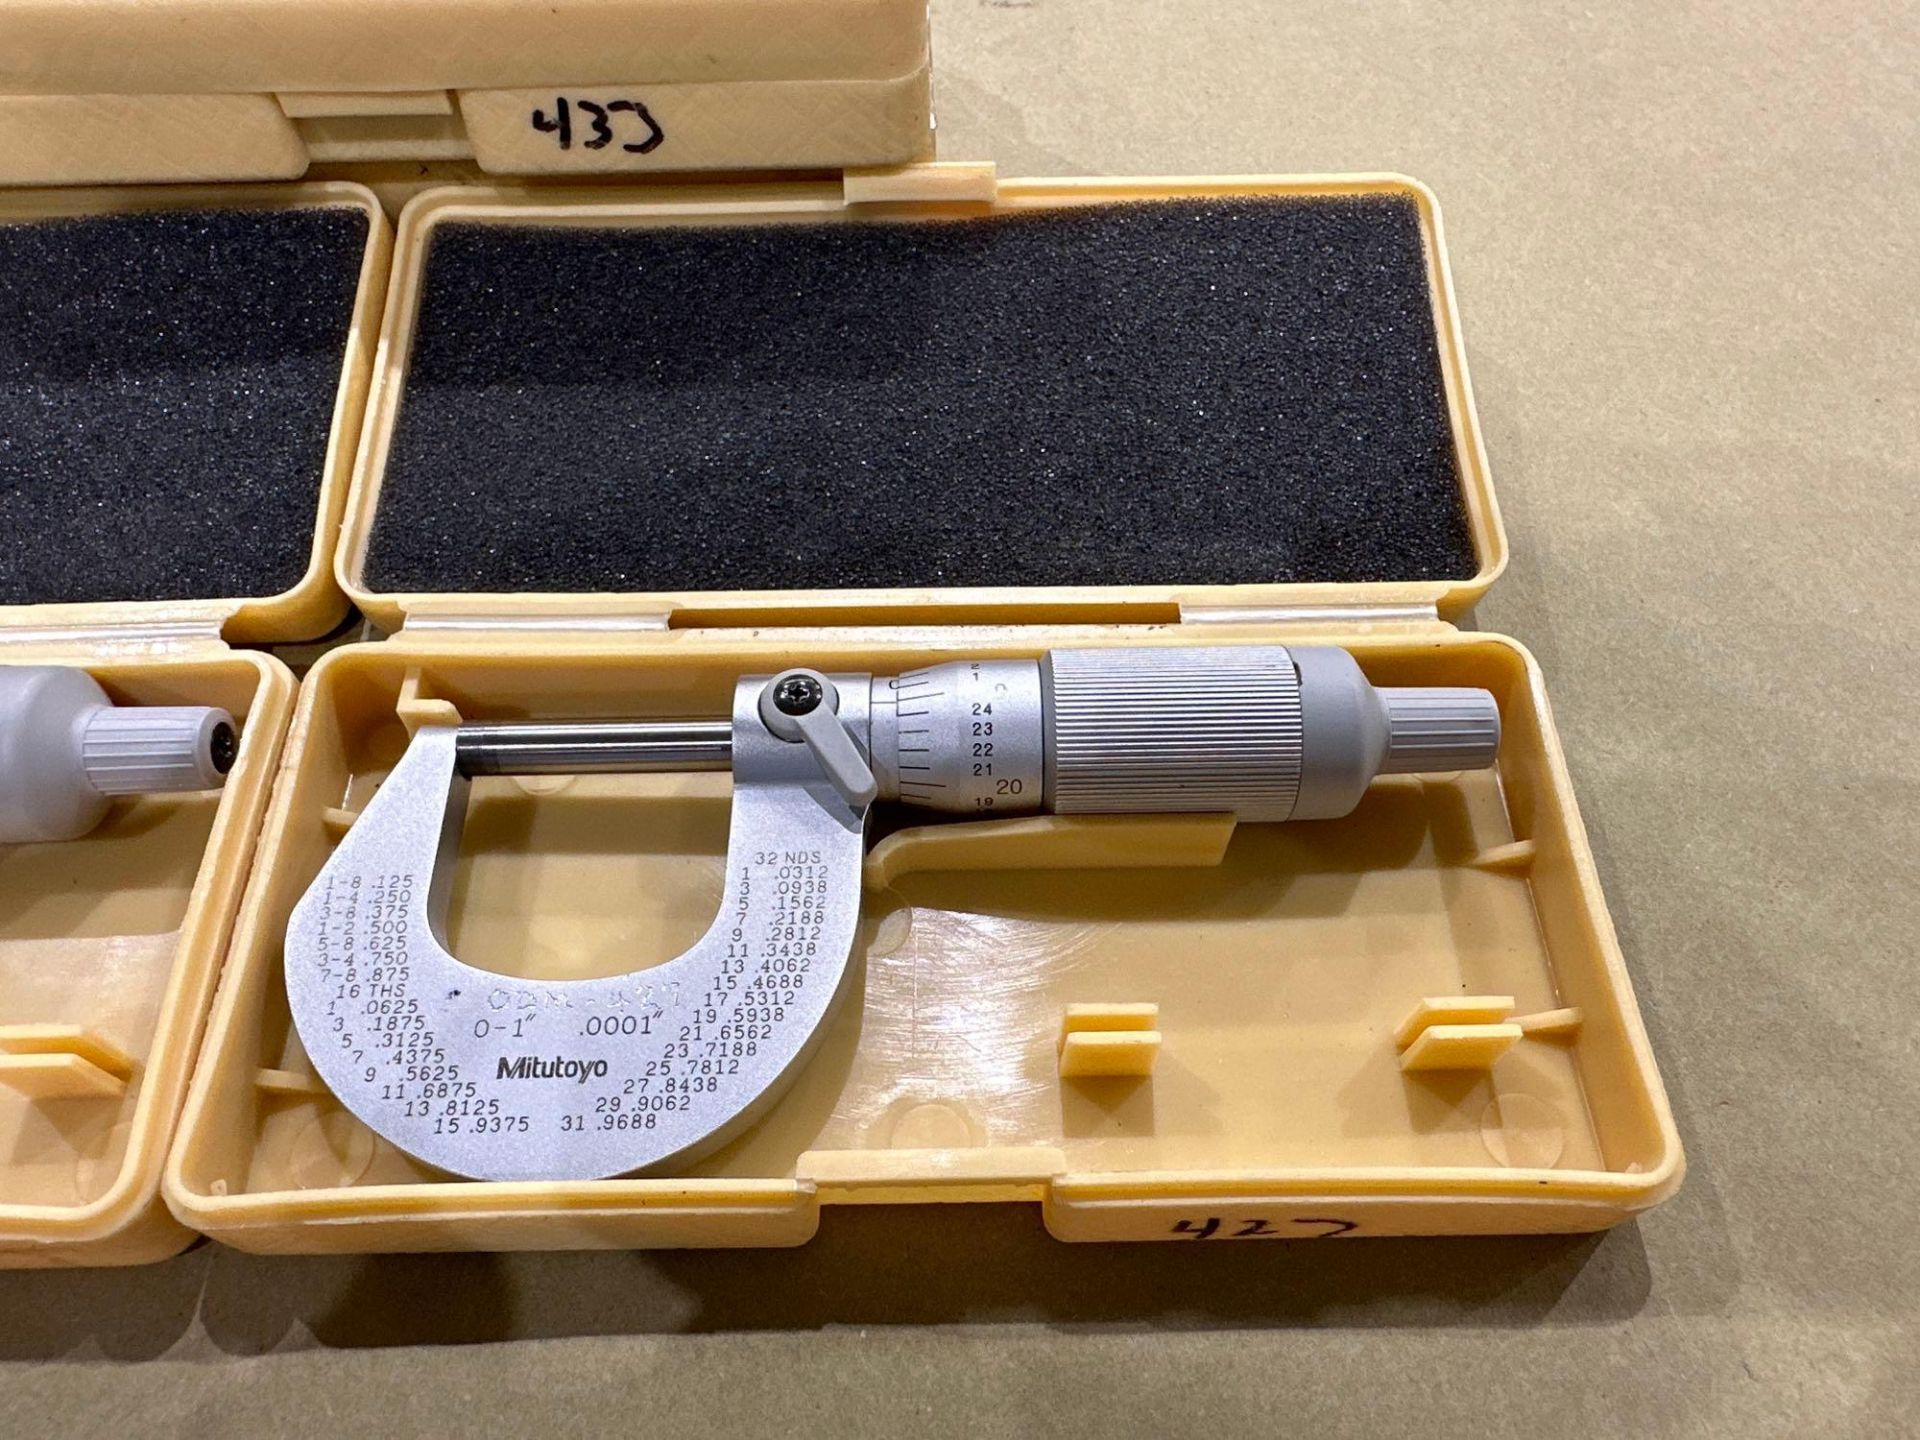 Lot of 4: Mitutoyo Mechanical OD Micrometer M227-1”, 0-1” Range, .0001” Graduation, in plastic box - Image 4 of 6